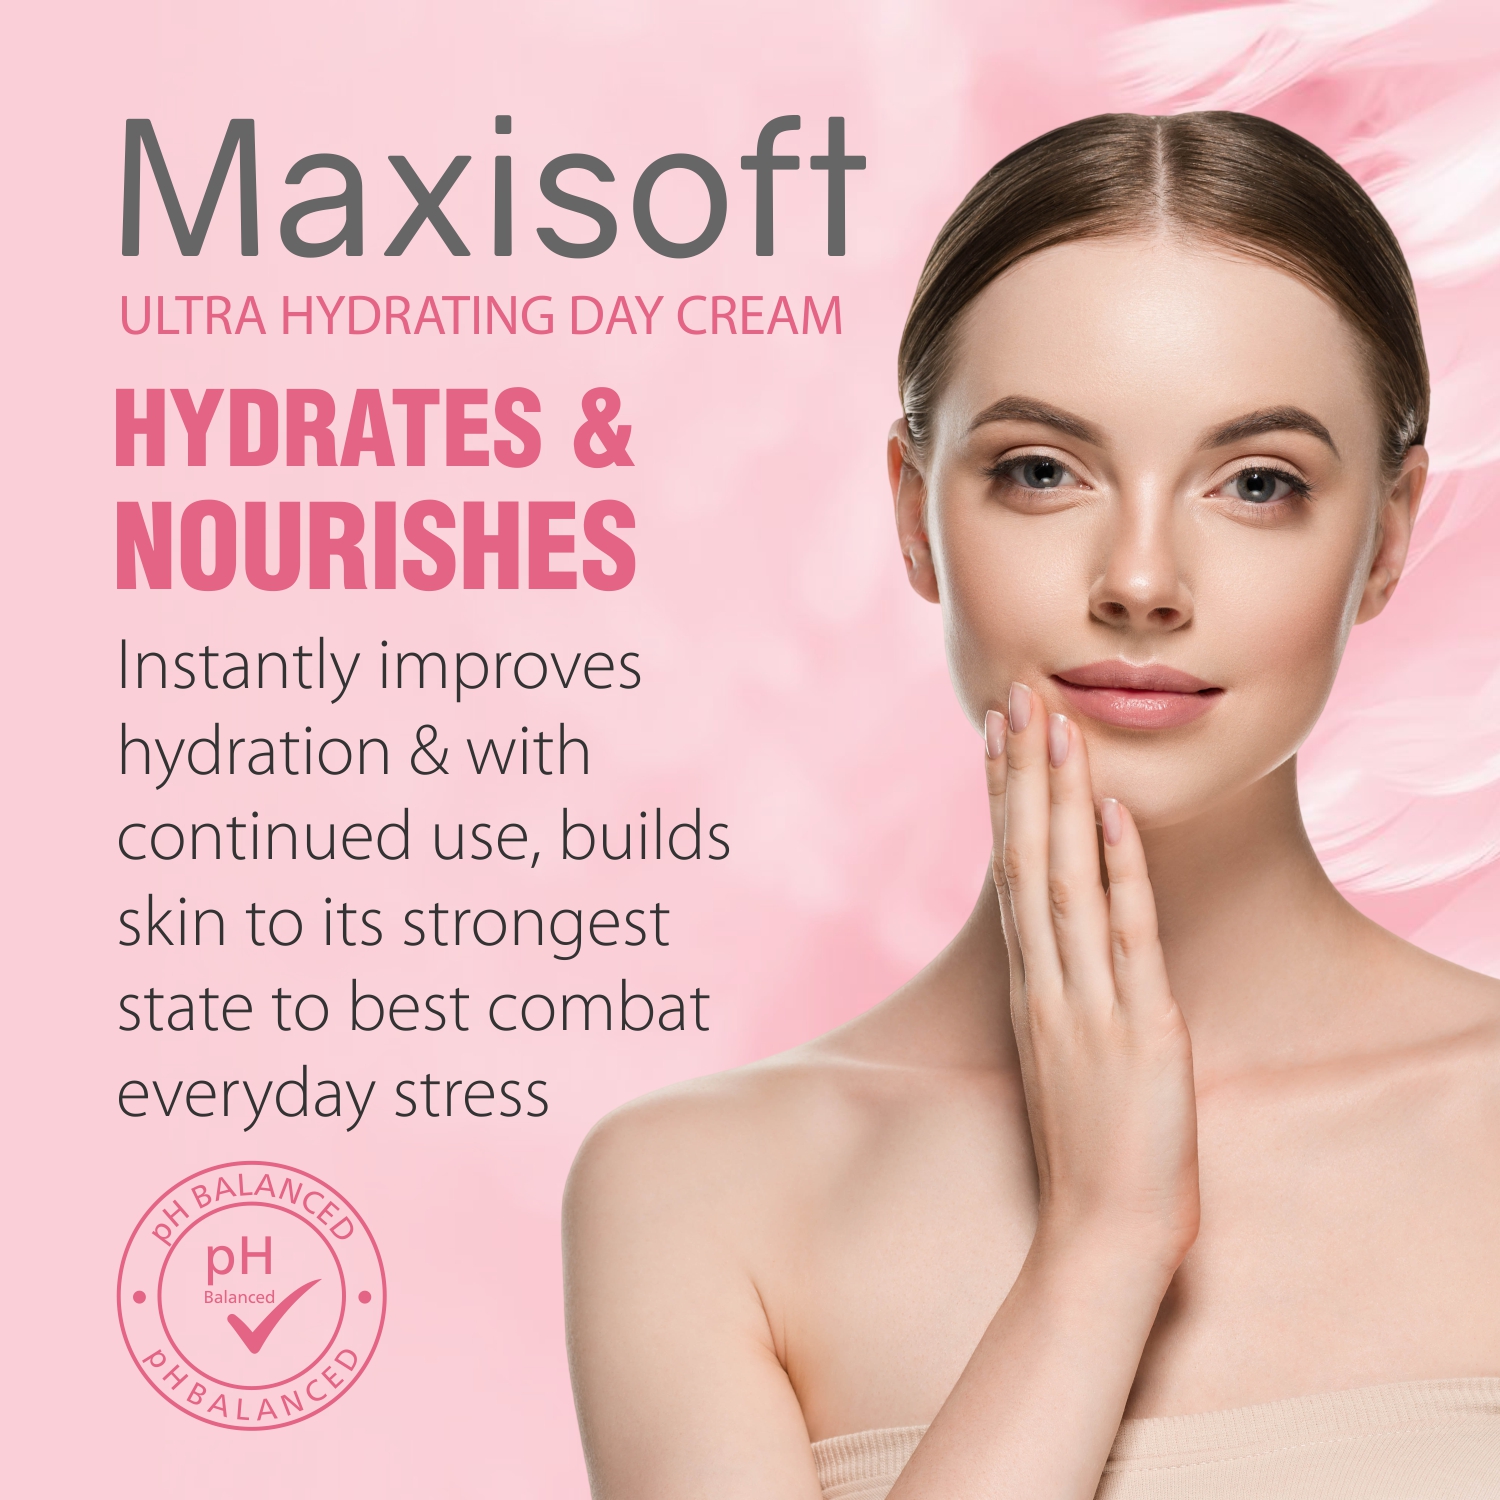 Maxisoft Ultra Hydrating Day Cream (50 gm)